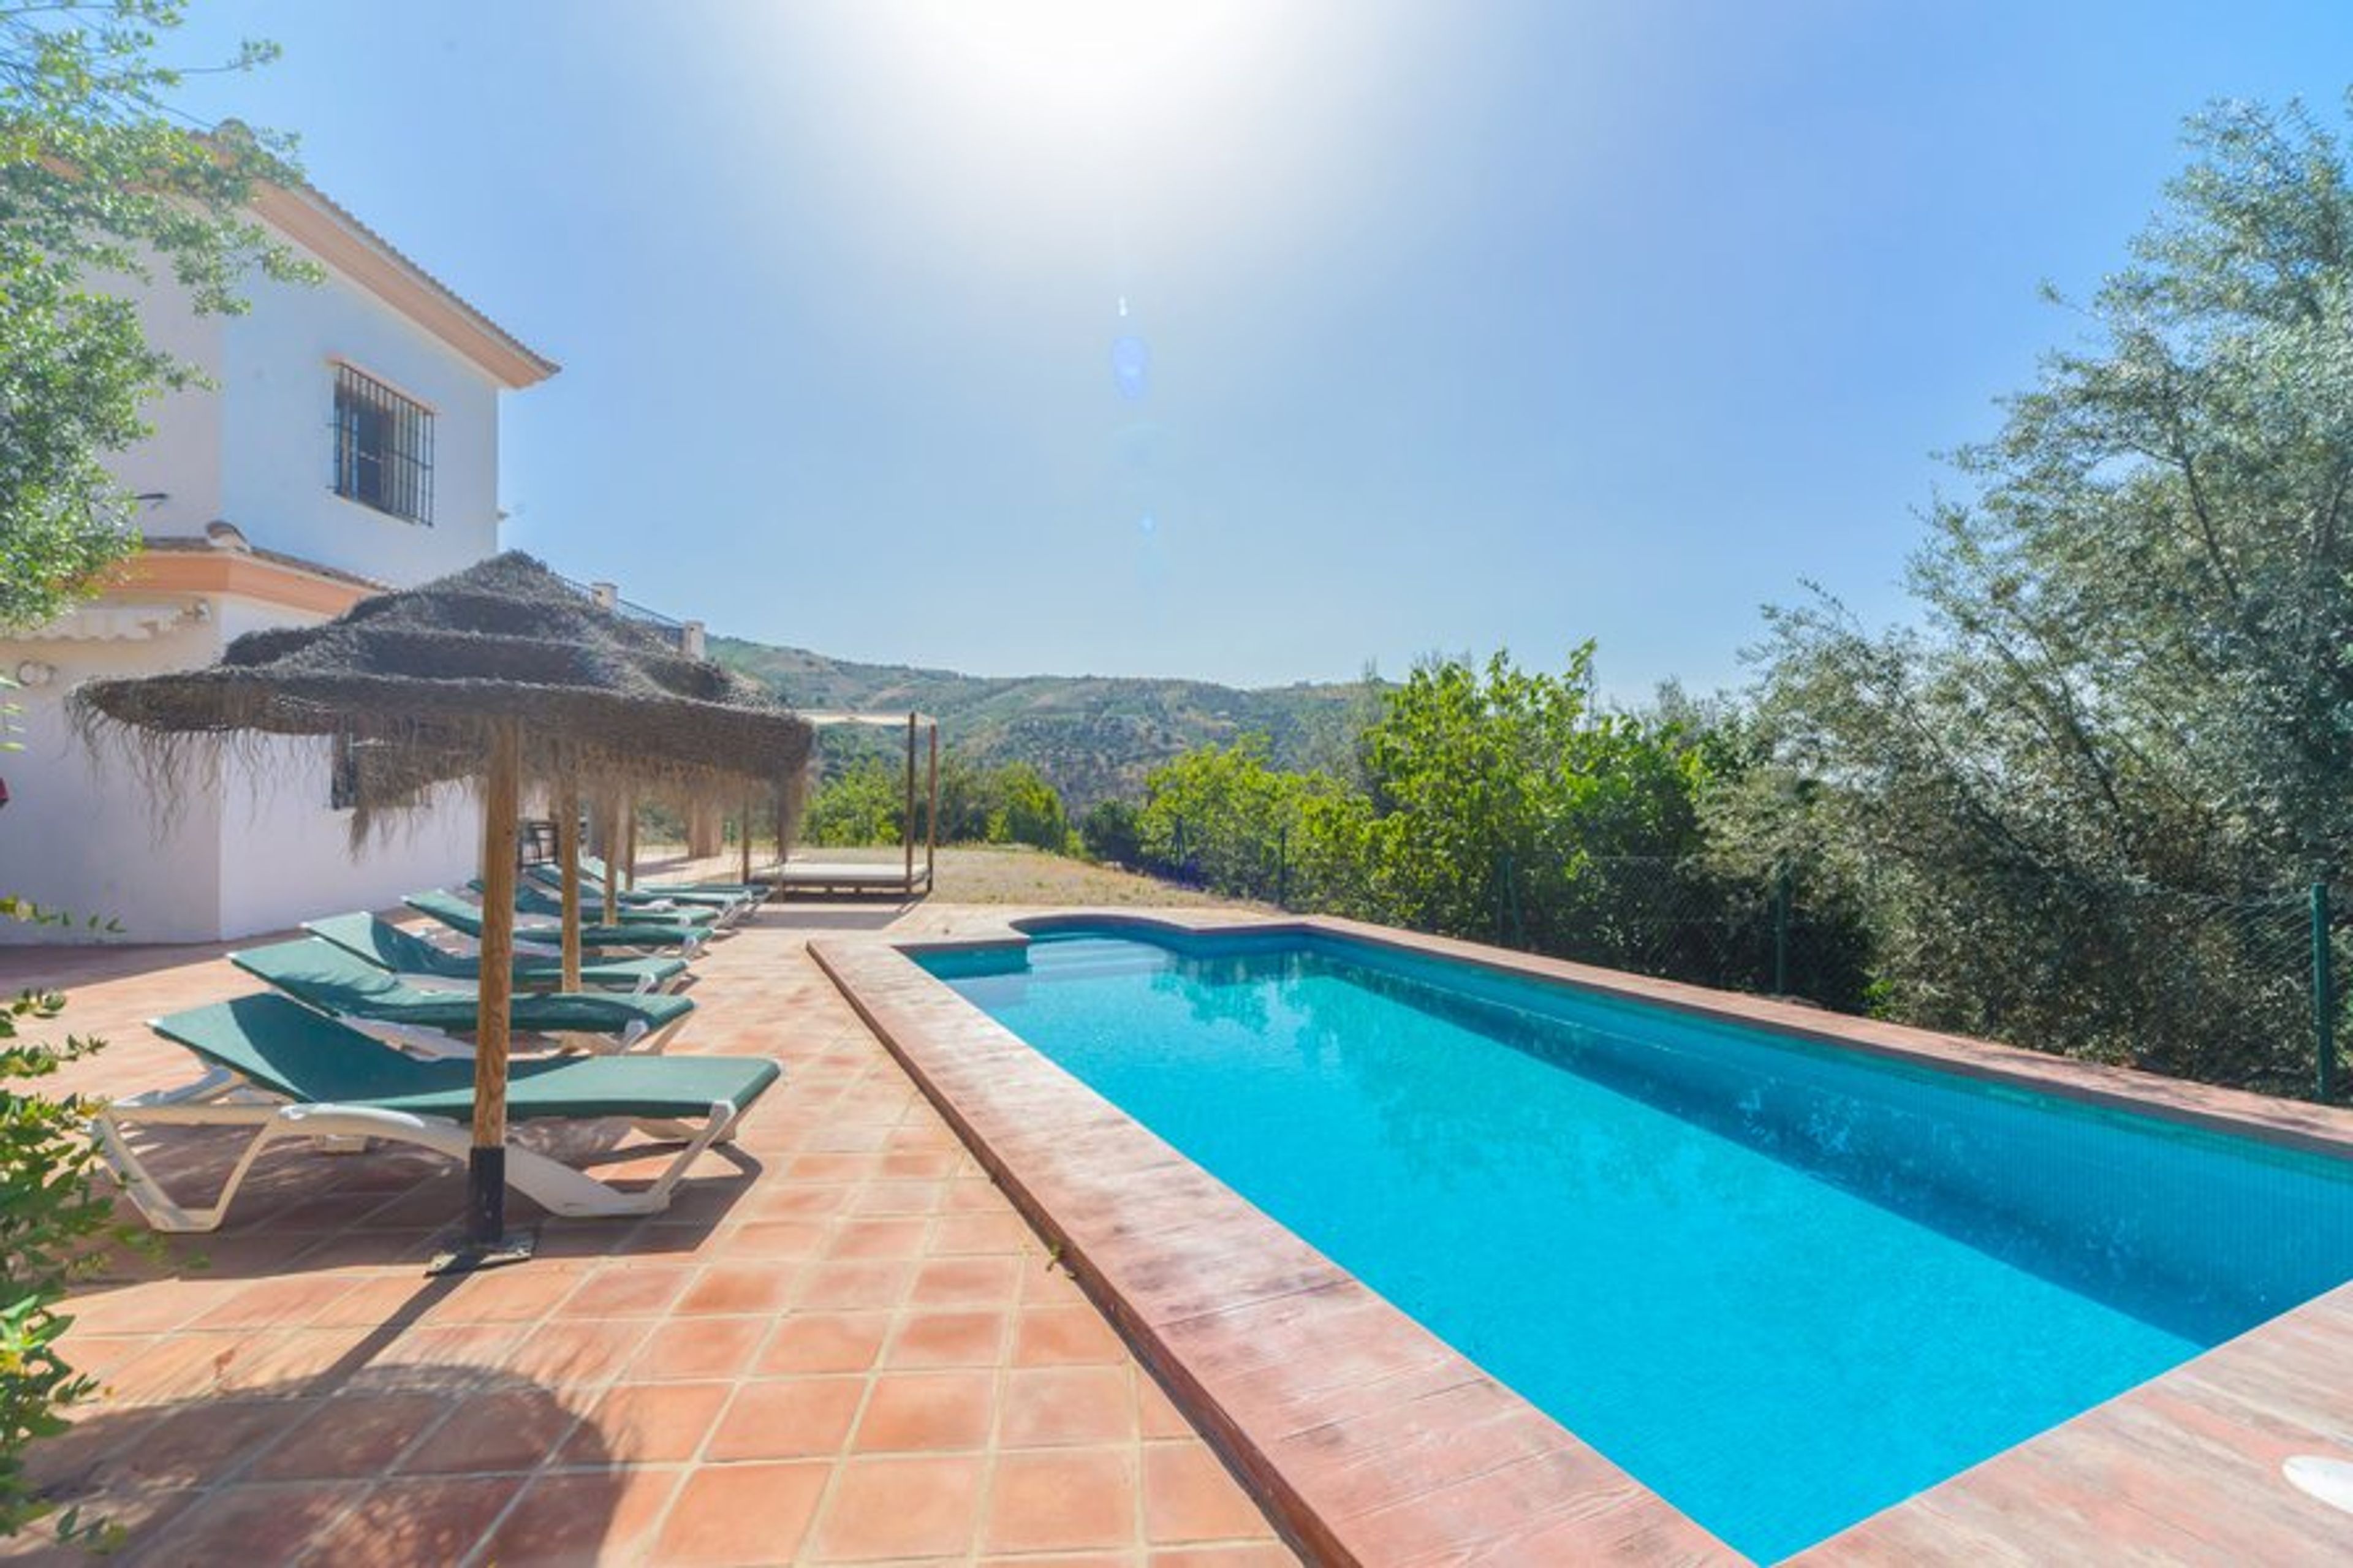 Villa Las Palomeras, private swimming pool and terraces.